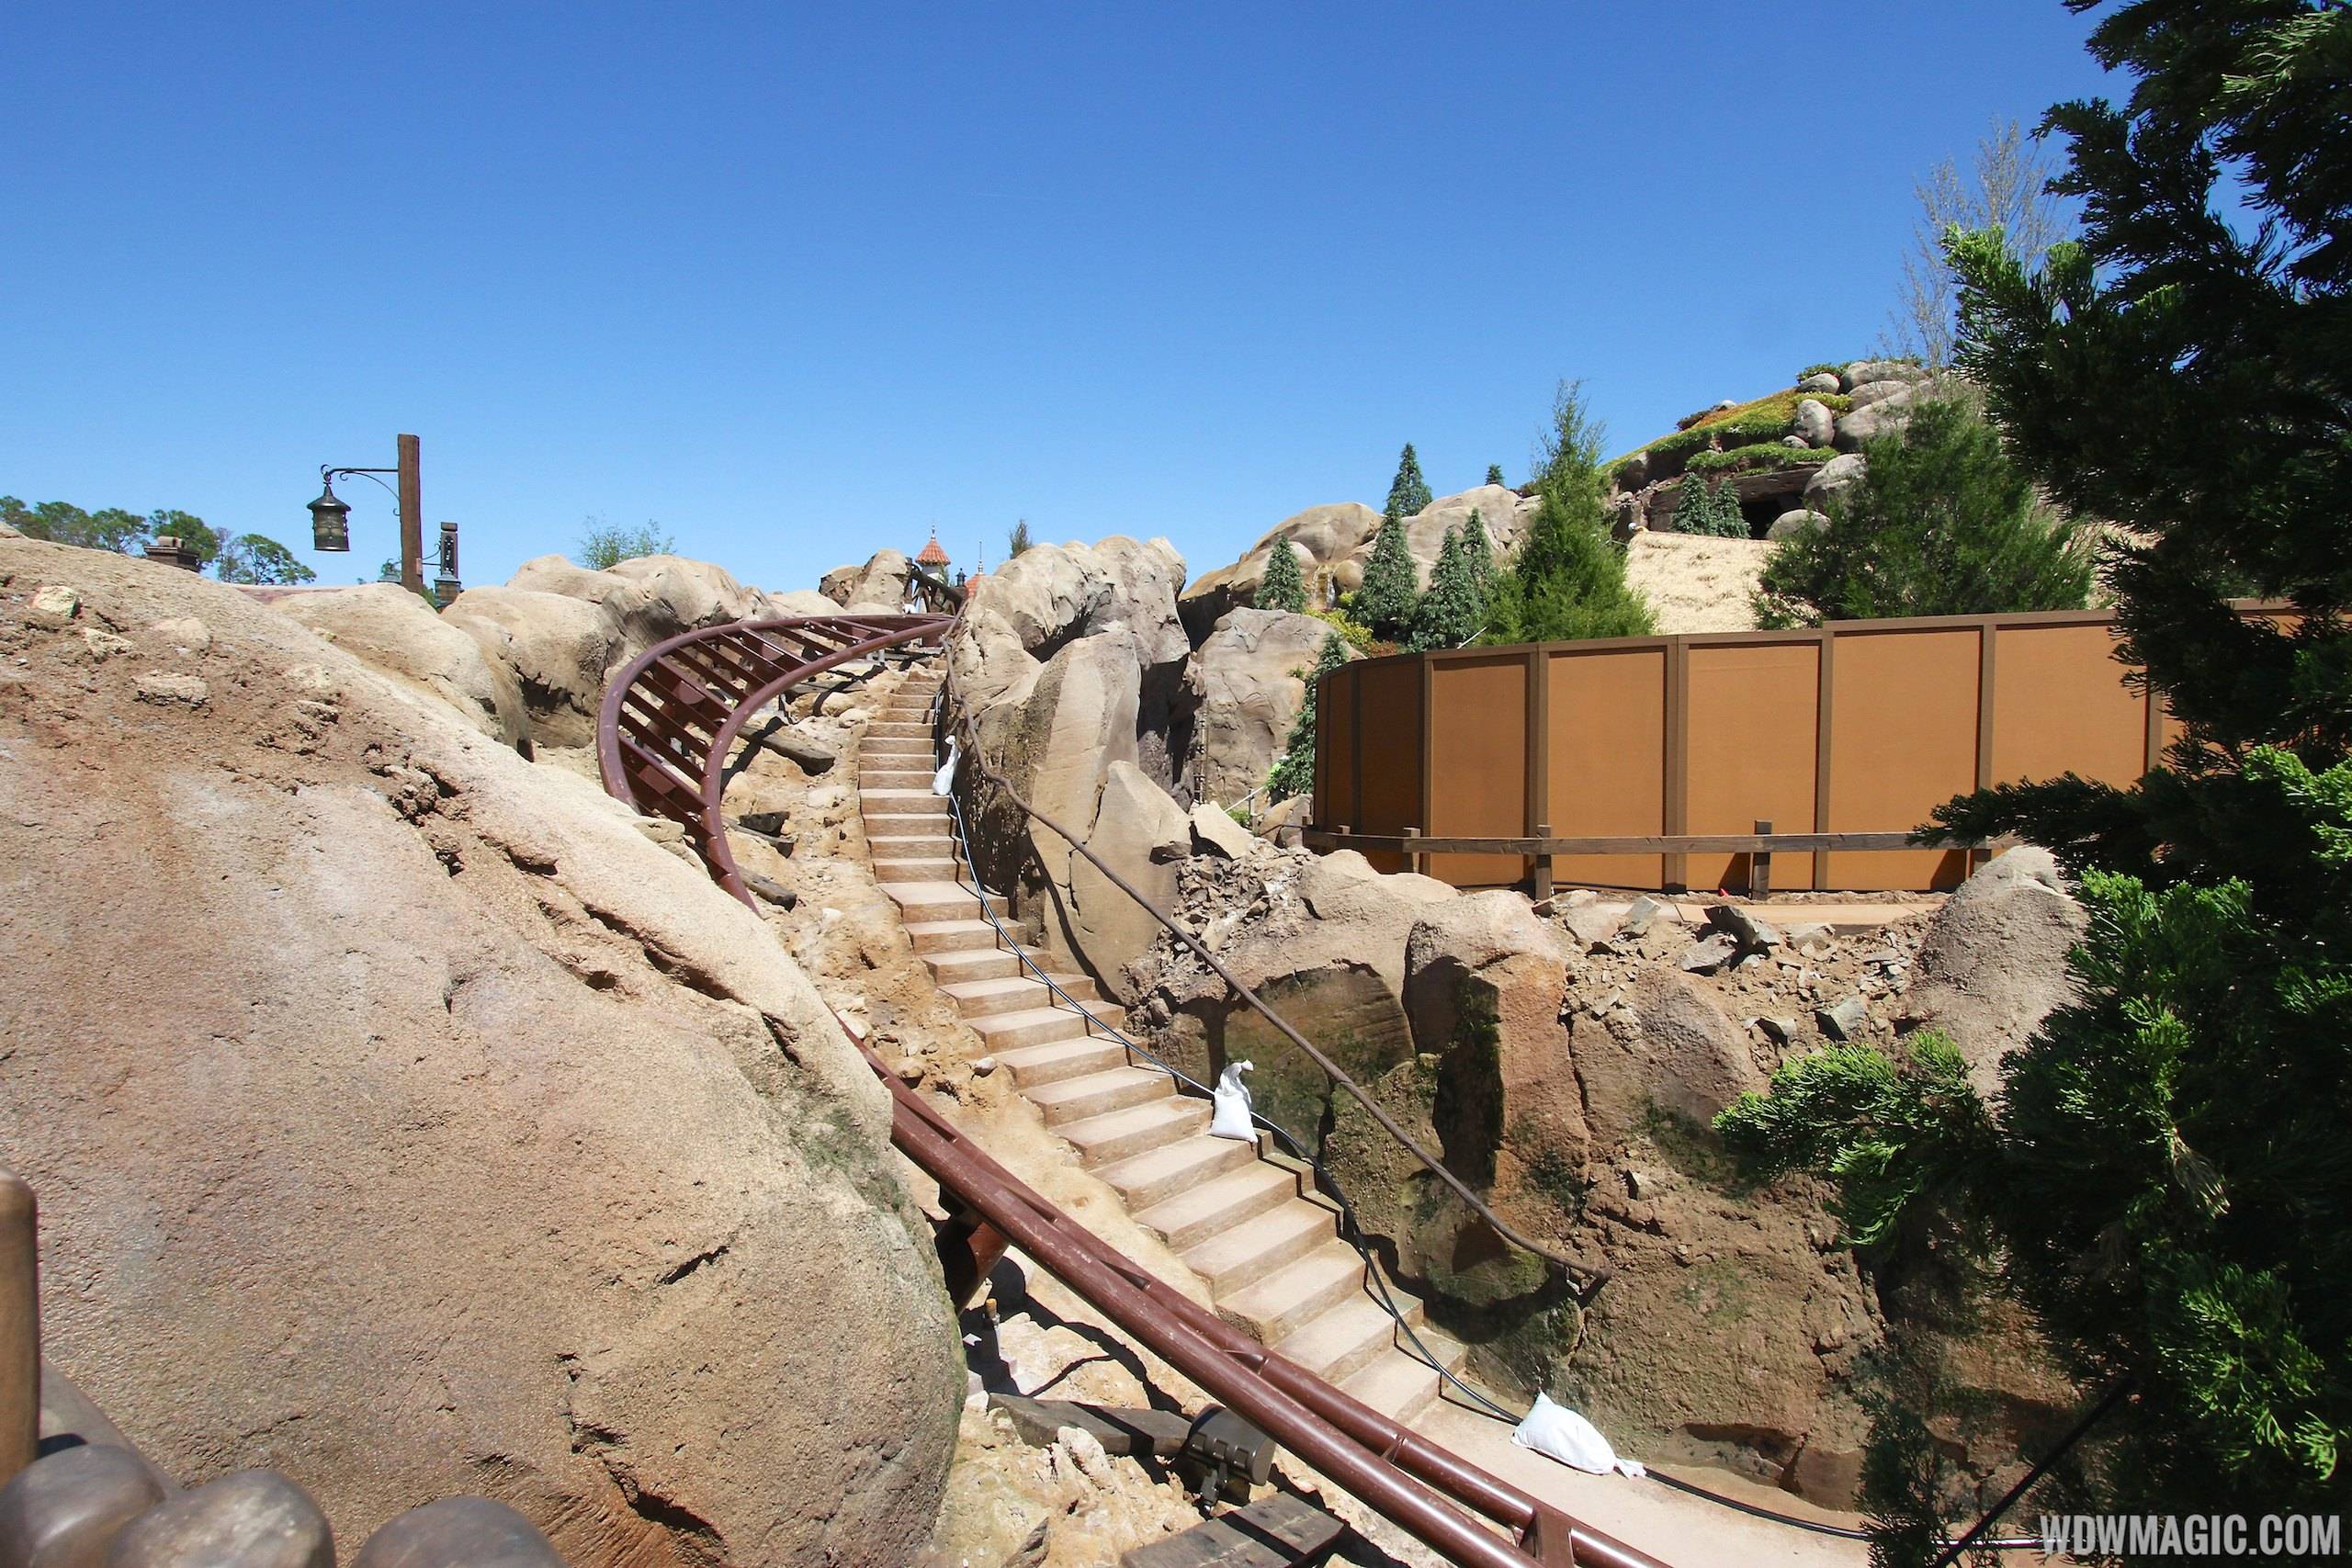 PHOTOS - Seven Dwarfs Mine Train coaster construction update